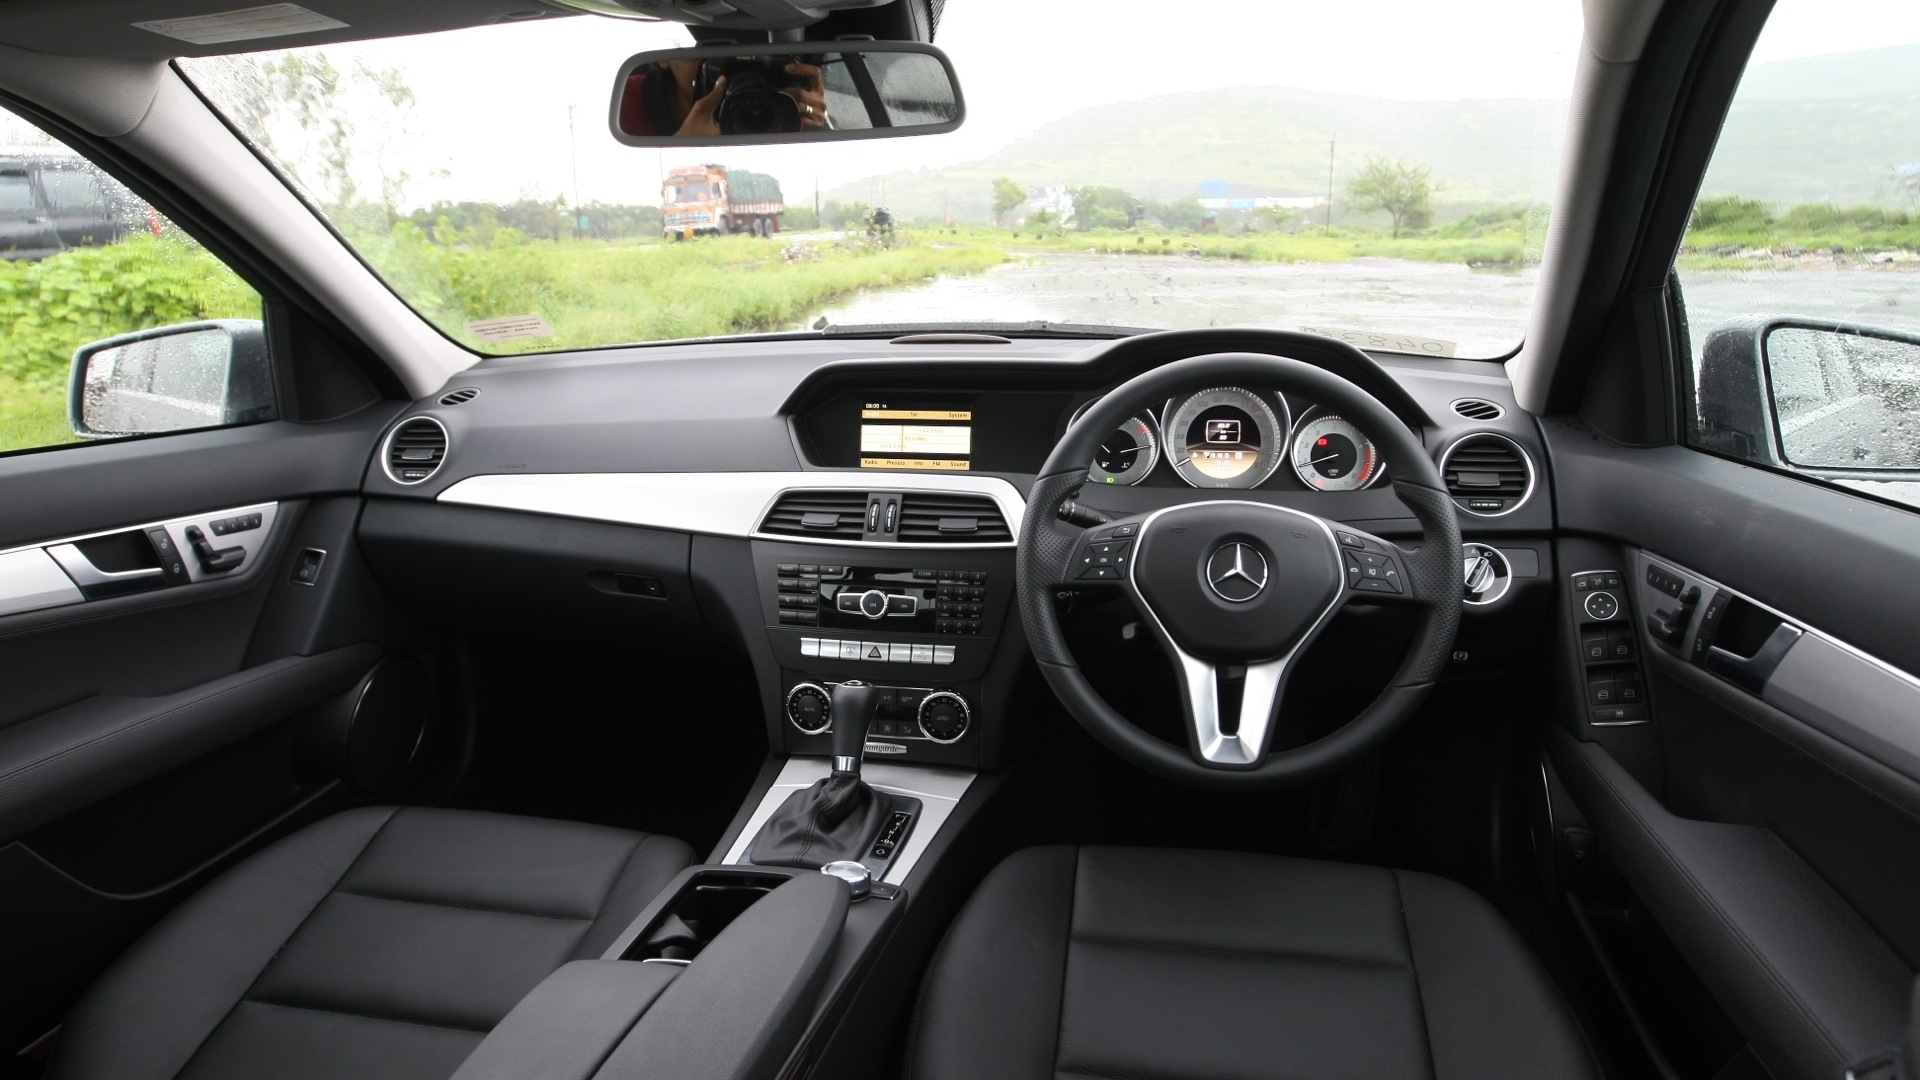 MercedesBenz-C class-2013-C200-CGi--Avantgarde-Interior